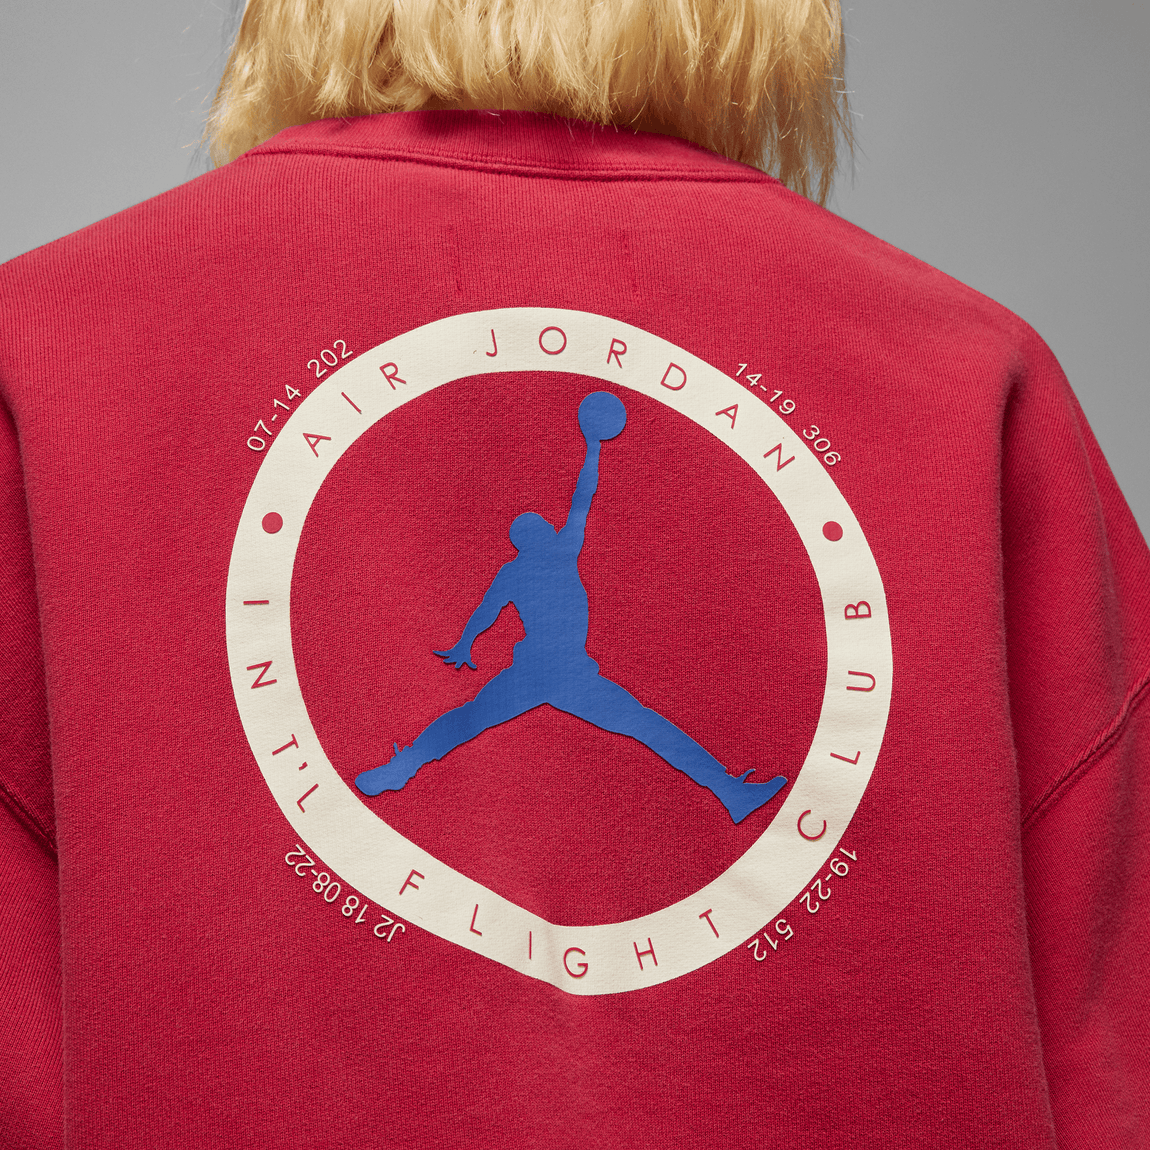 Jordan X Two18 Women's Sweatshirt (Gym Red/Coconut Milk) - Jordan X Two18 Women's Sweatshirt (Gym Red/Coconut Milk) - 